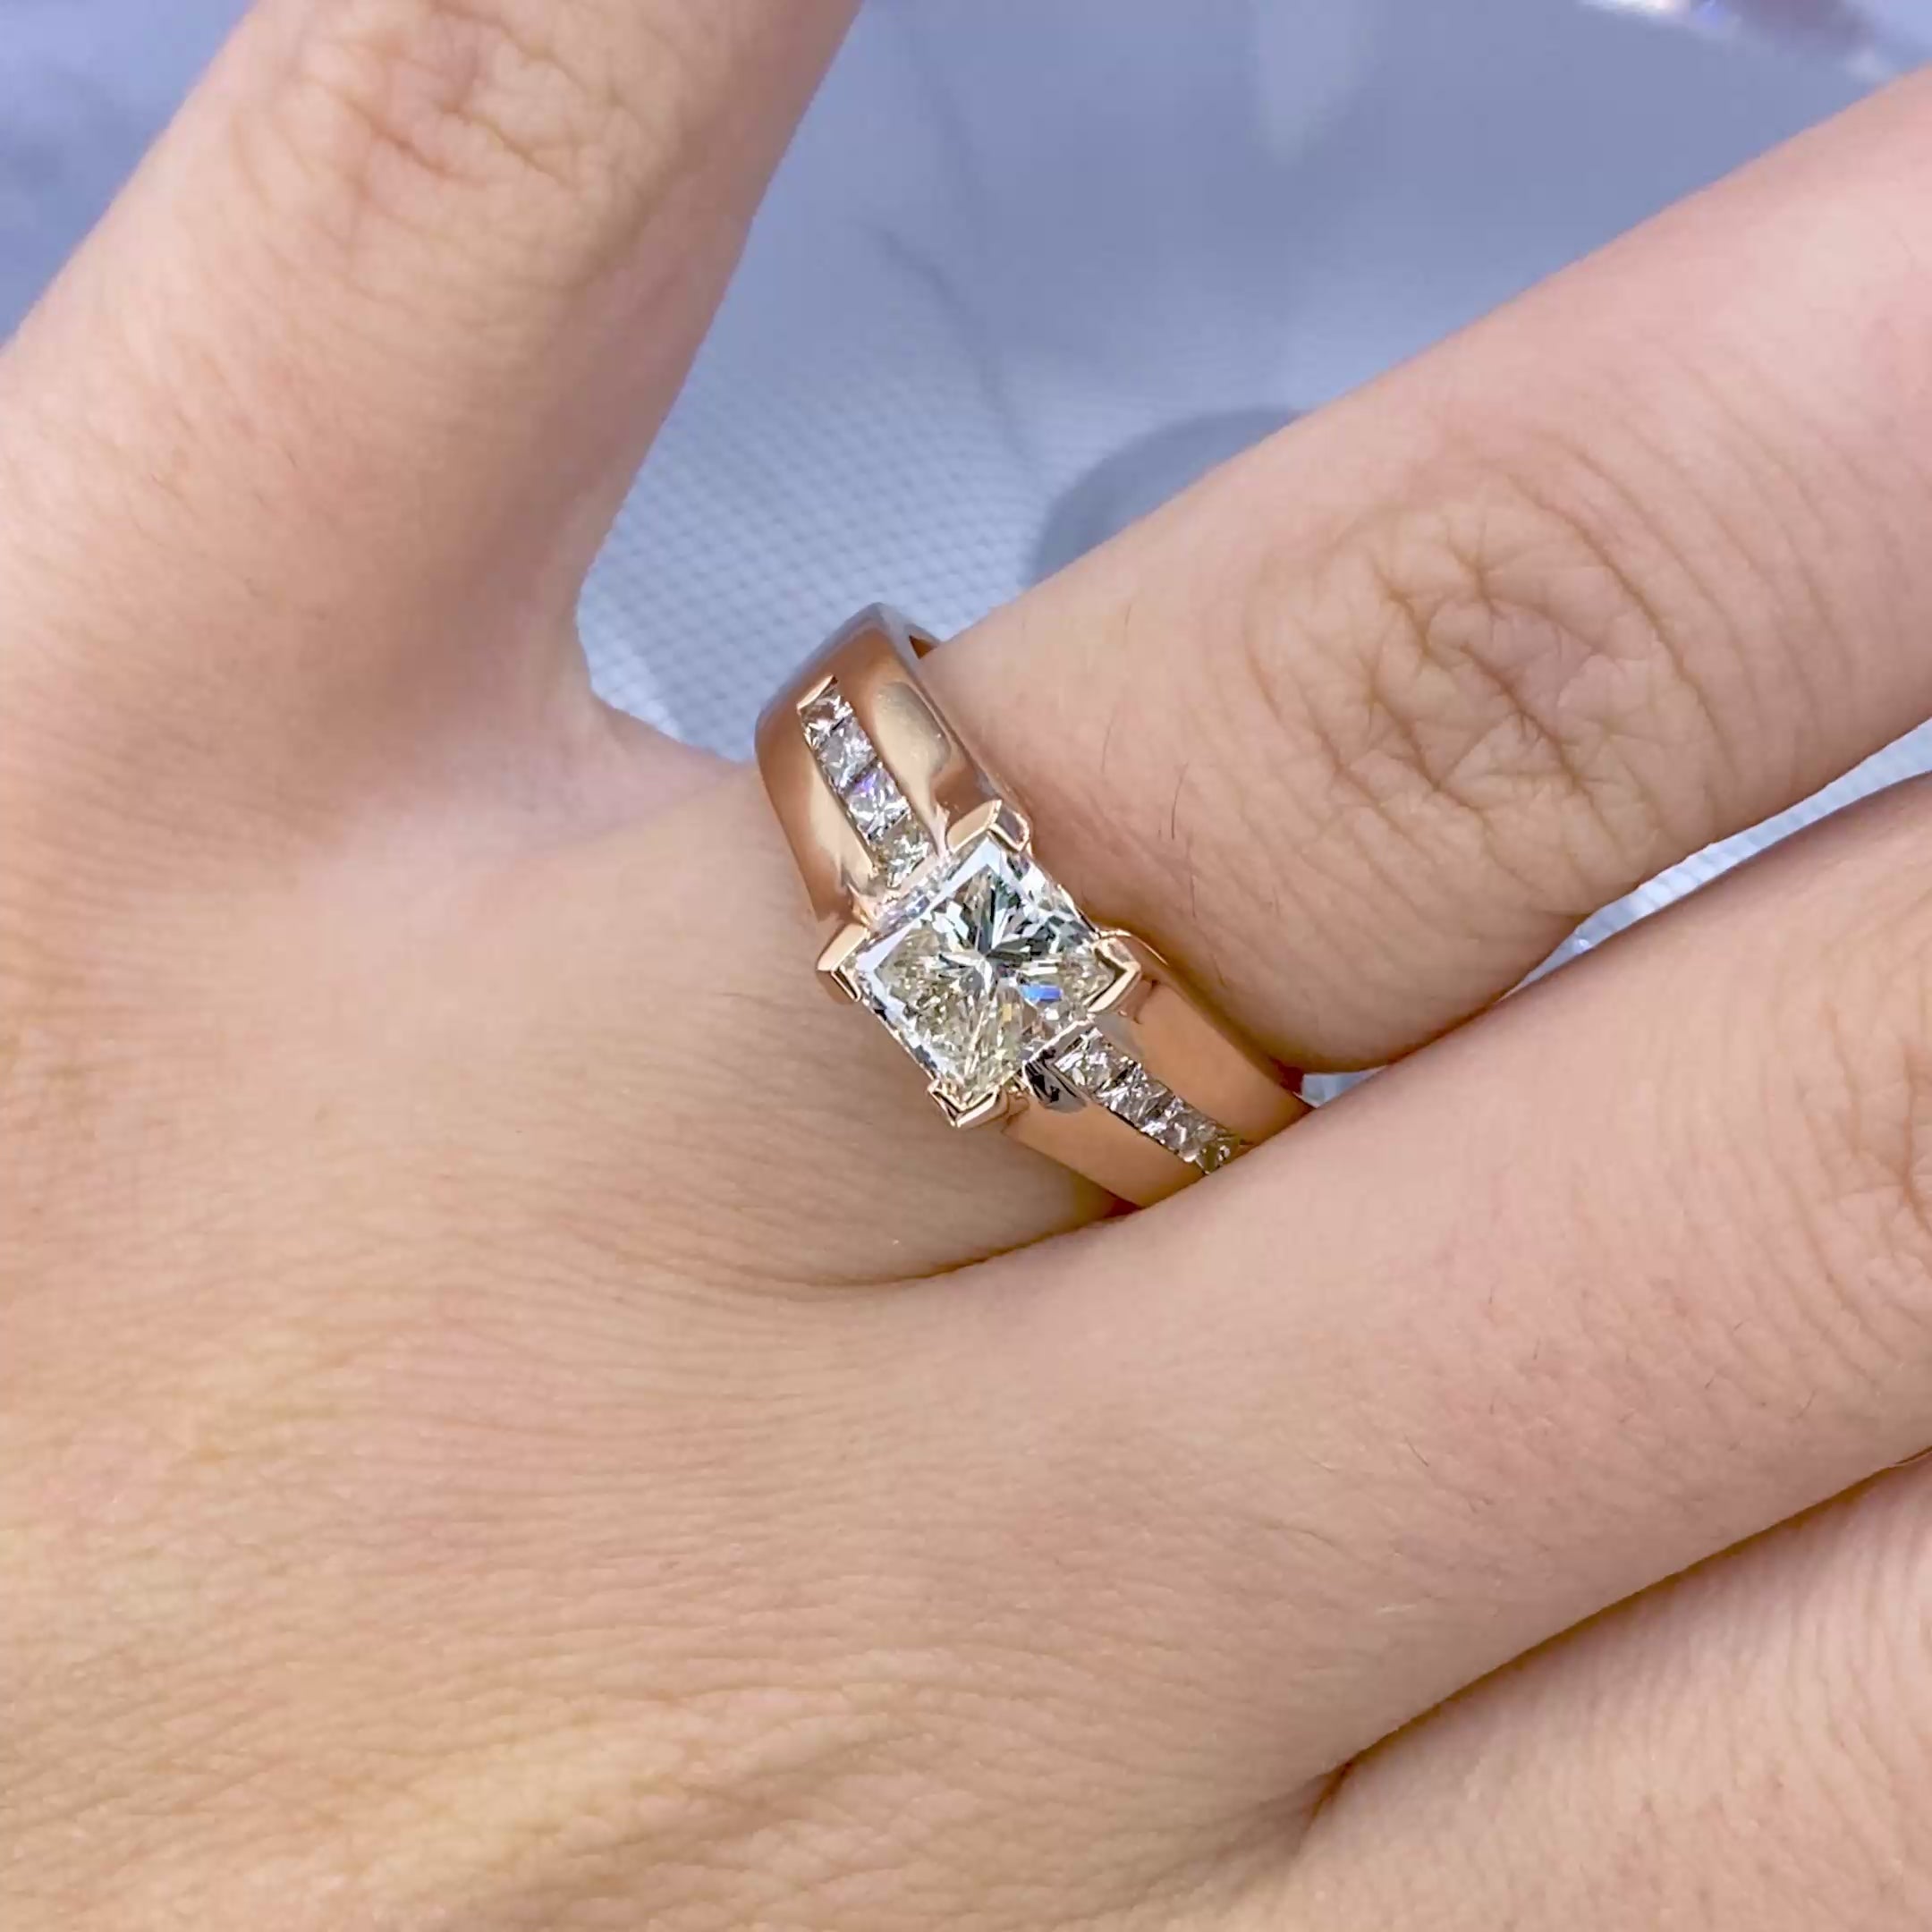 Elegant 1.60 CT Princess Cut Diamond Engagement Ring in 14KT Rose Gold